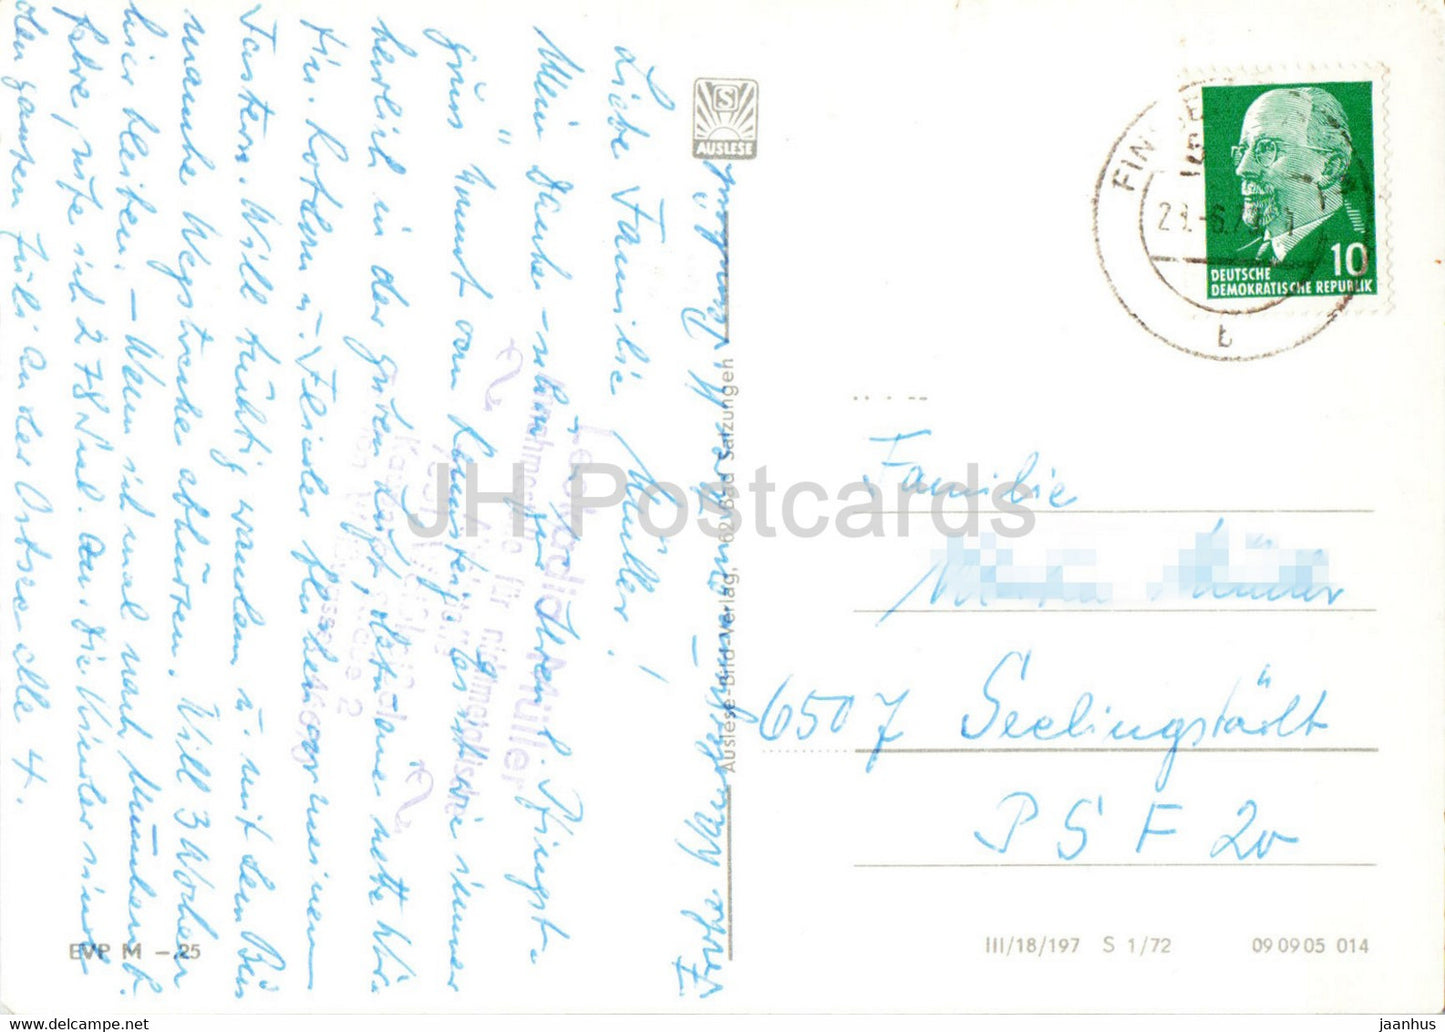 Finsterbergen - Spiessberghaus - Tagescafe Leinagrund - Thur Wald - old postcard - Germany DDR - used